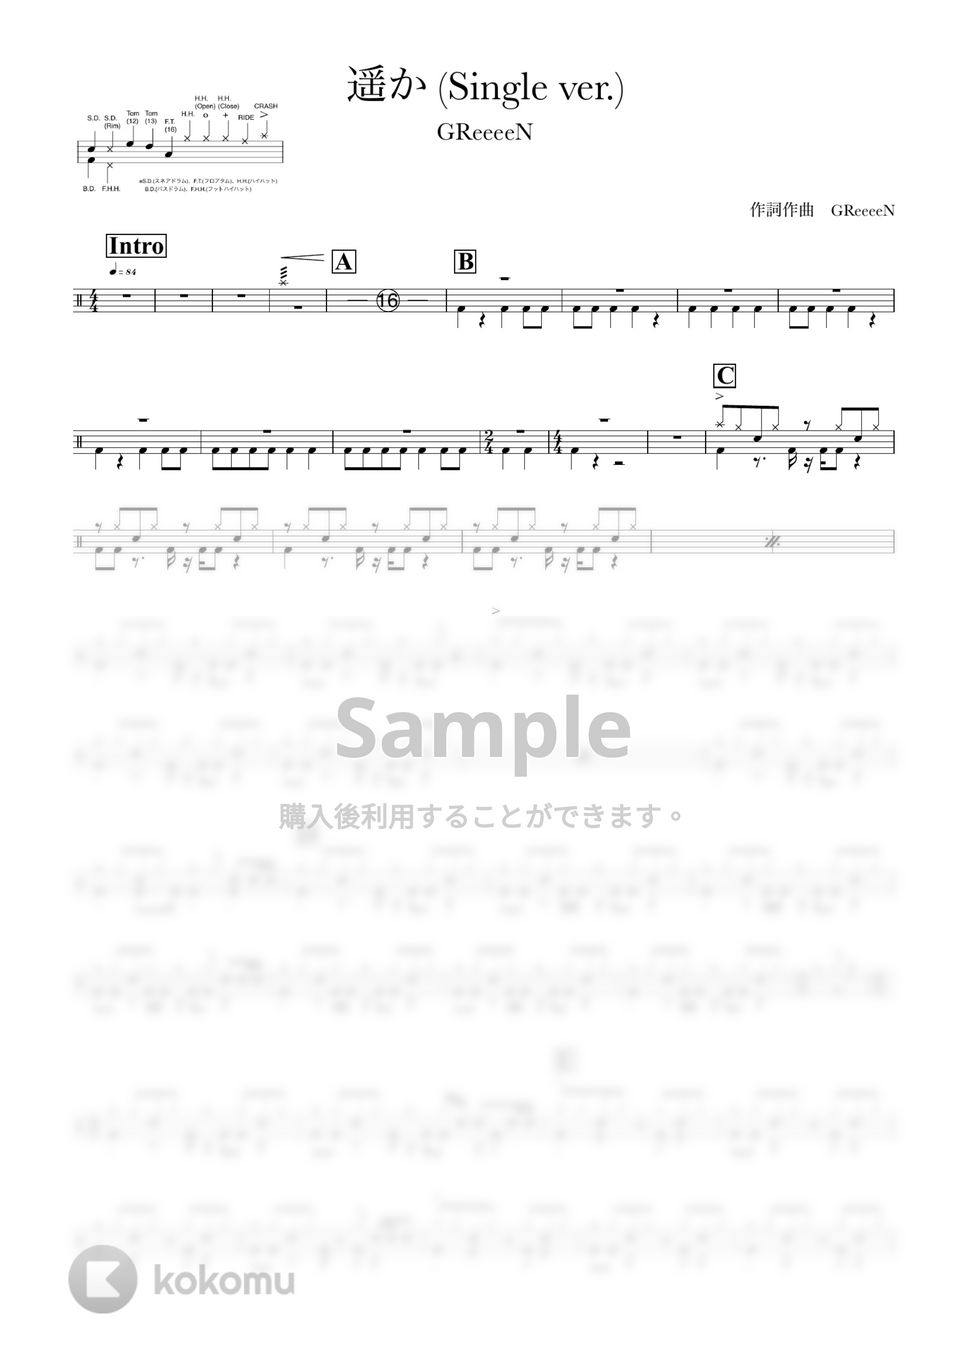 GReeeeN - 遥か (Single ver.) by ONEDRUMS